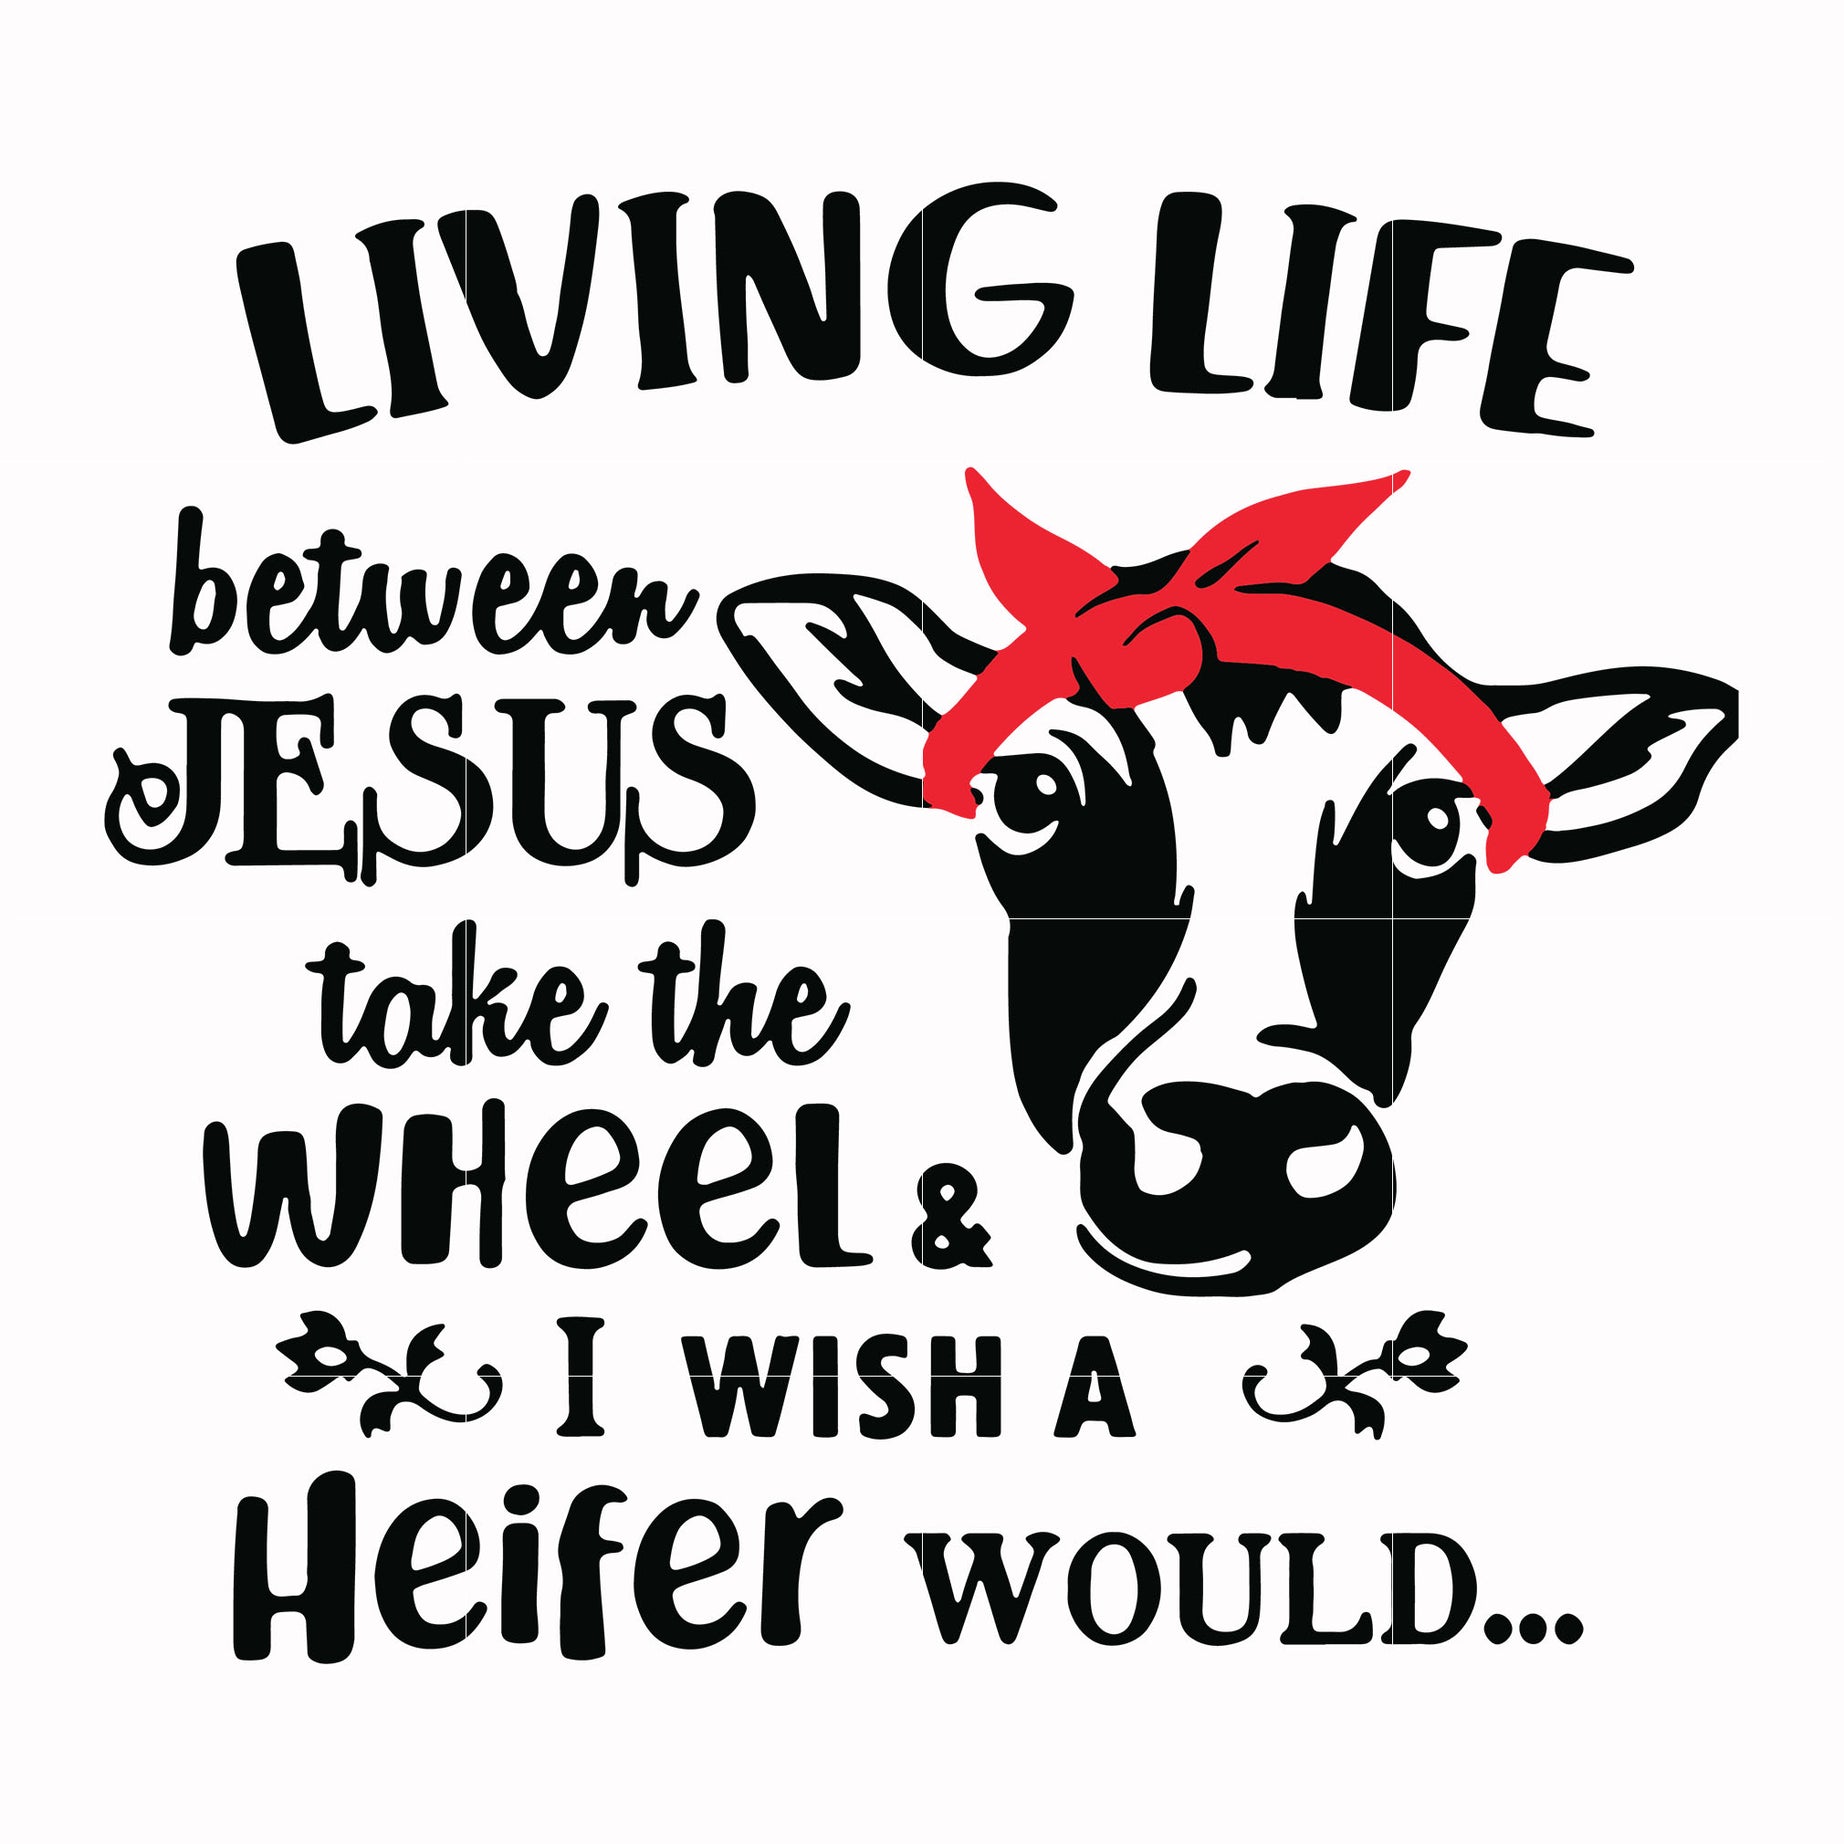 Living life between jesus take the wheel & i wish a heifer would svg, png, dxf, eps digital file TD2707208